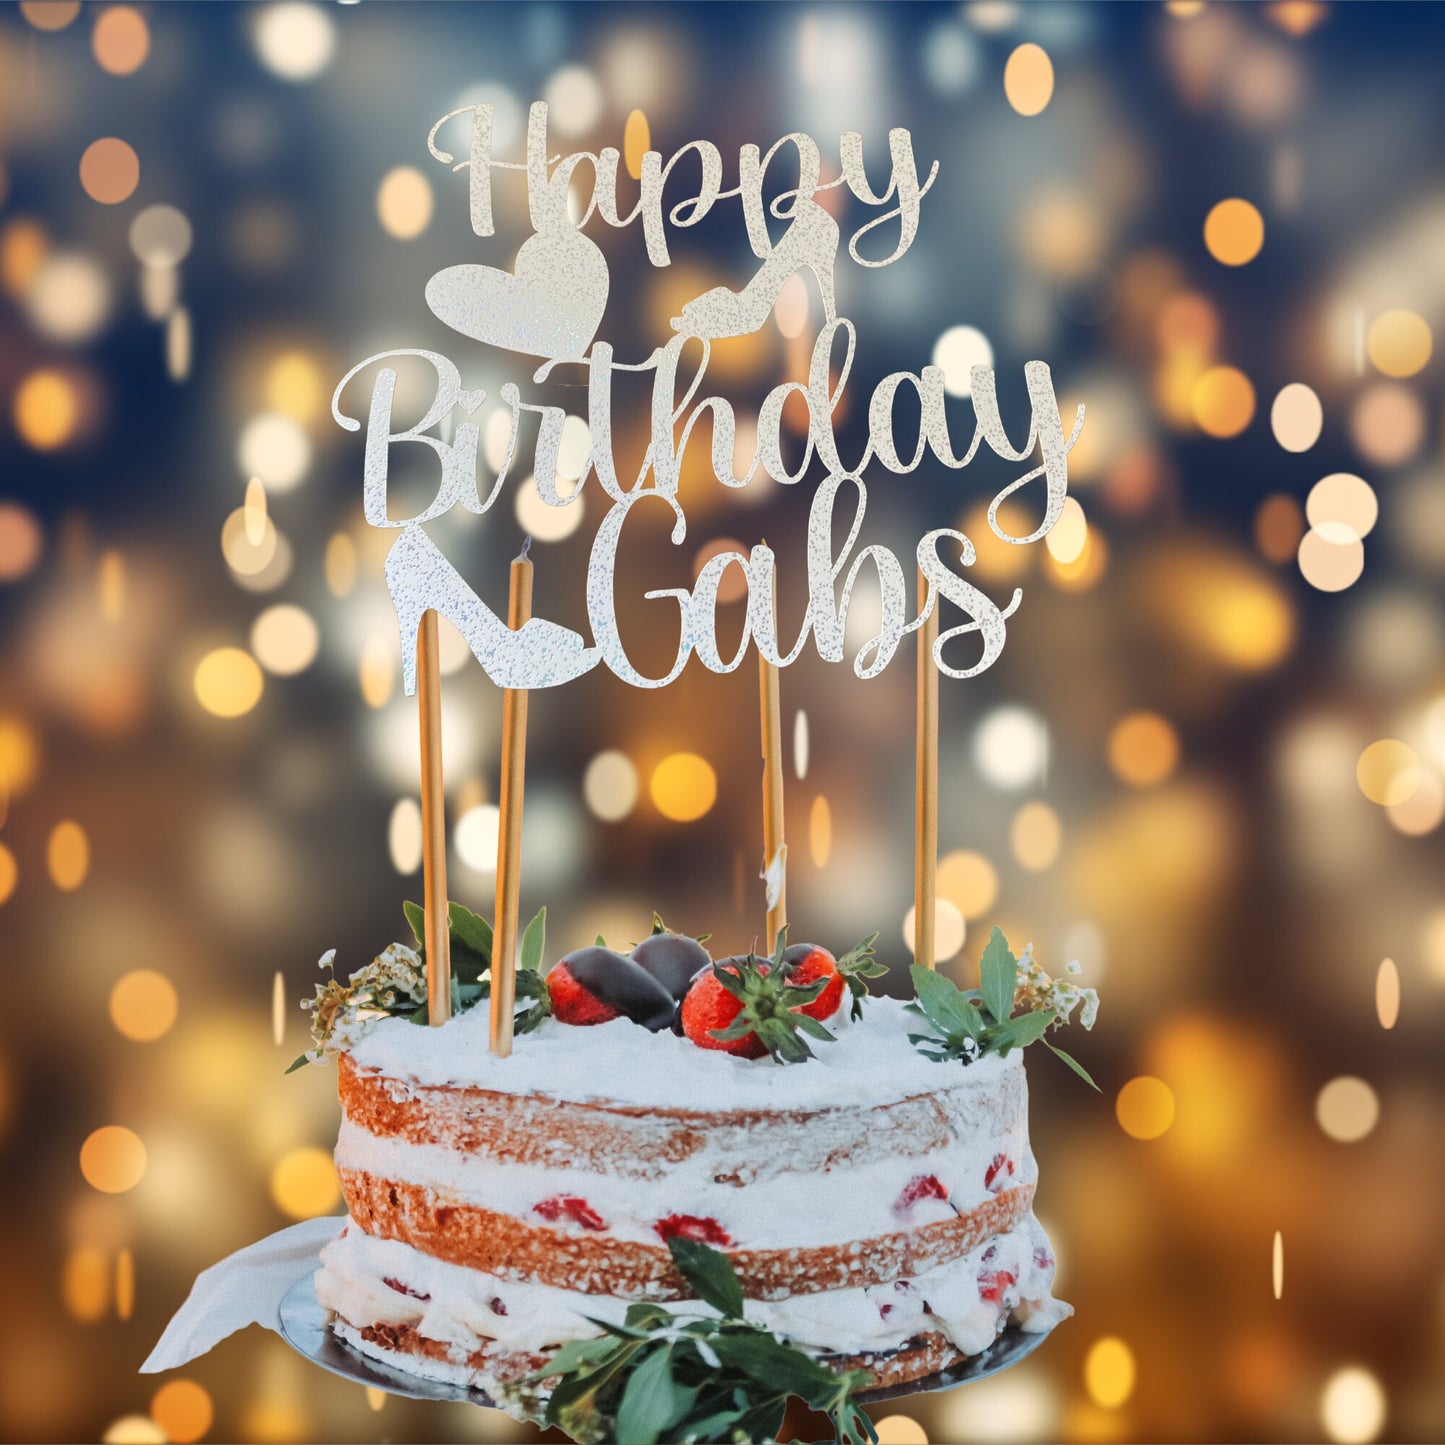 Personalised Birthday Cake Topper for Shoe Lover, Large Happy Birthday Celebration Cake Decoration, Custom Handmade Birthday Cake Decoration